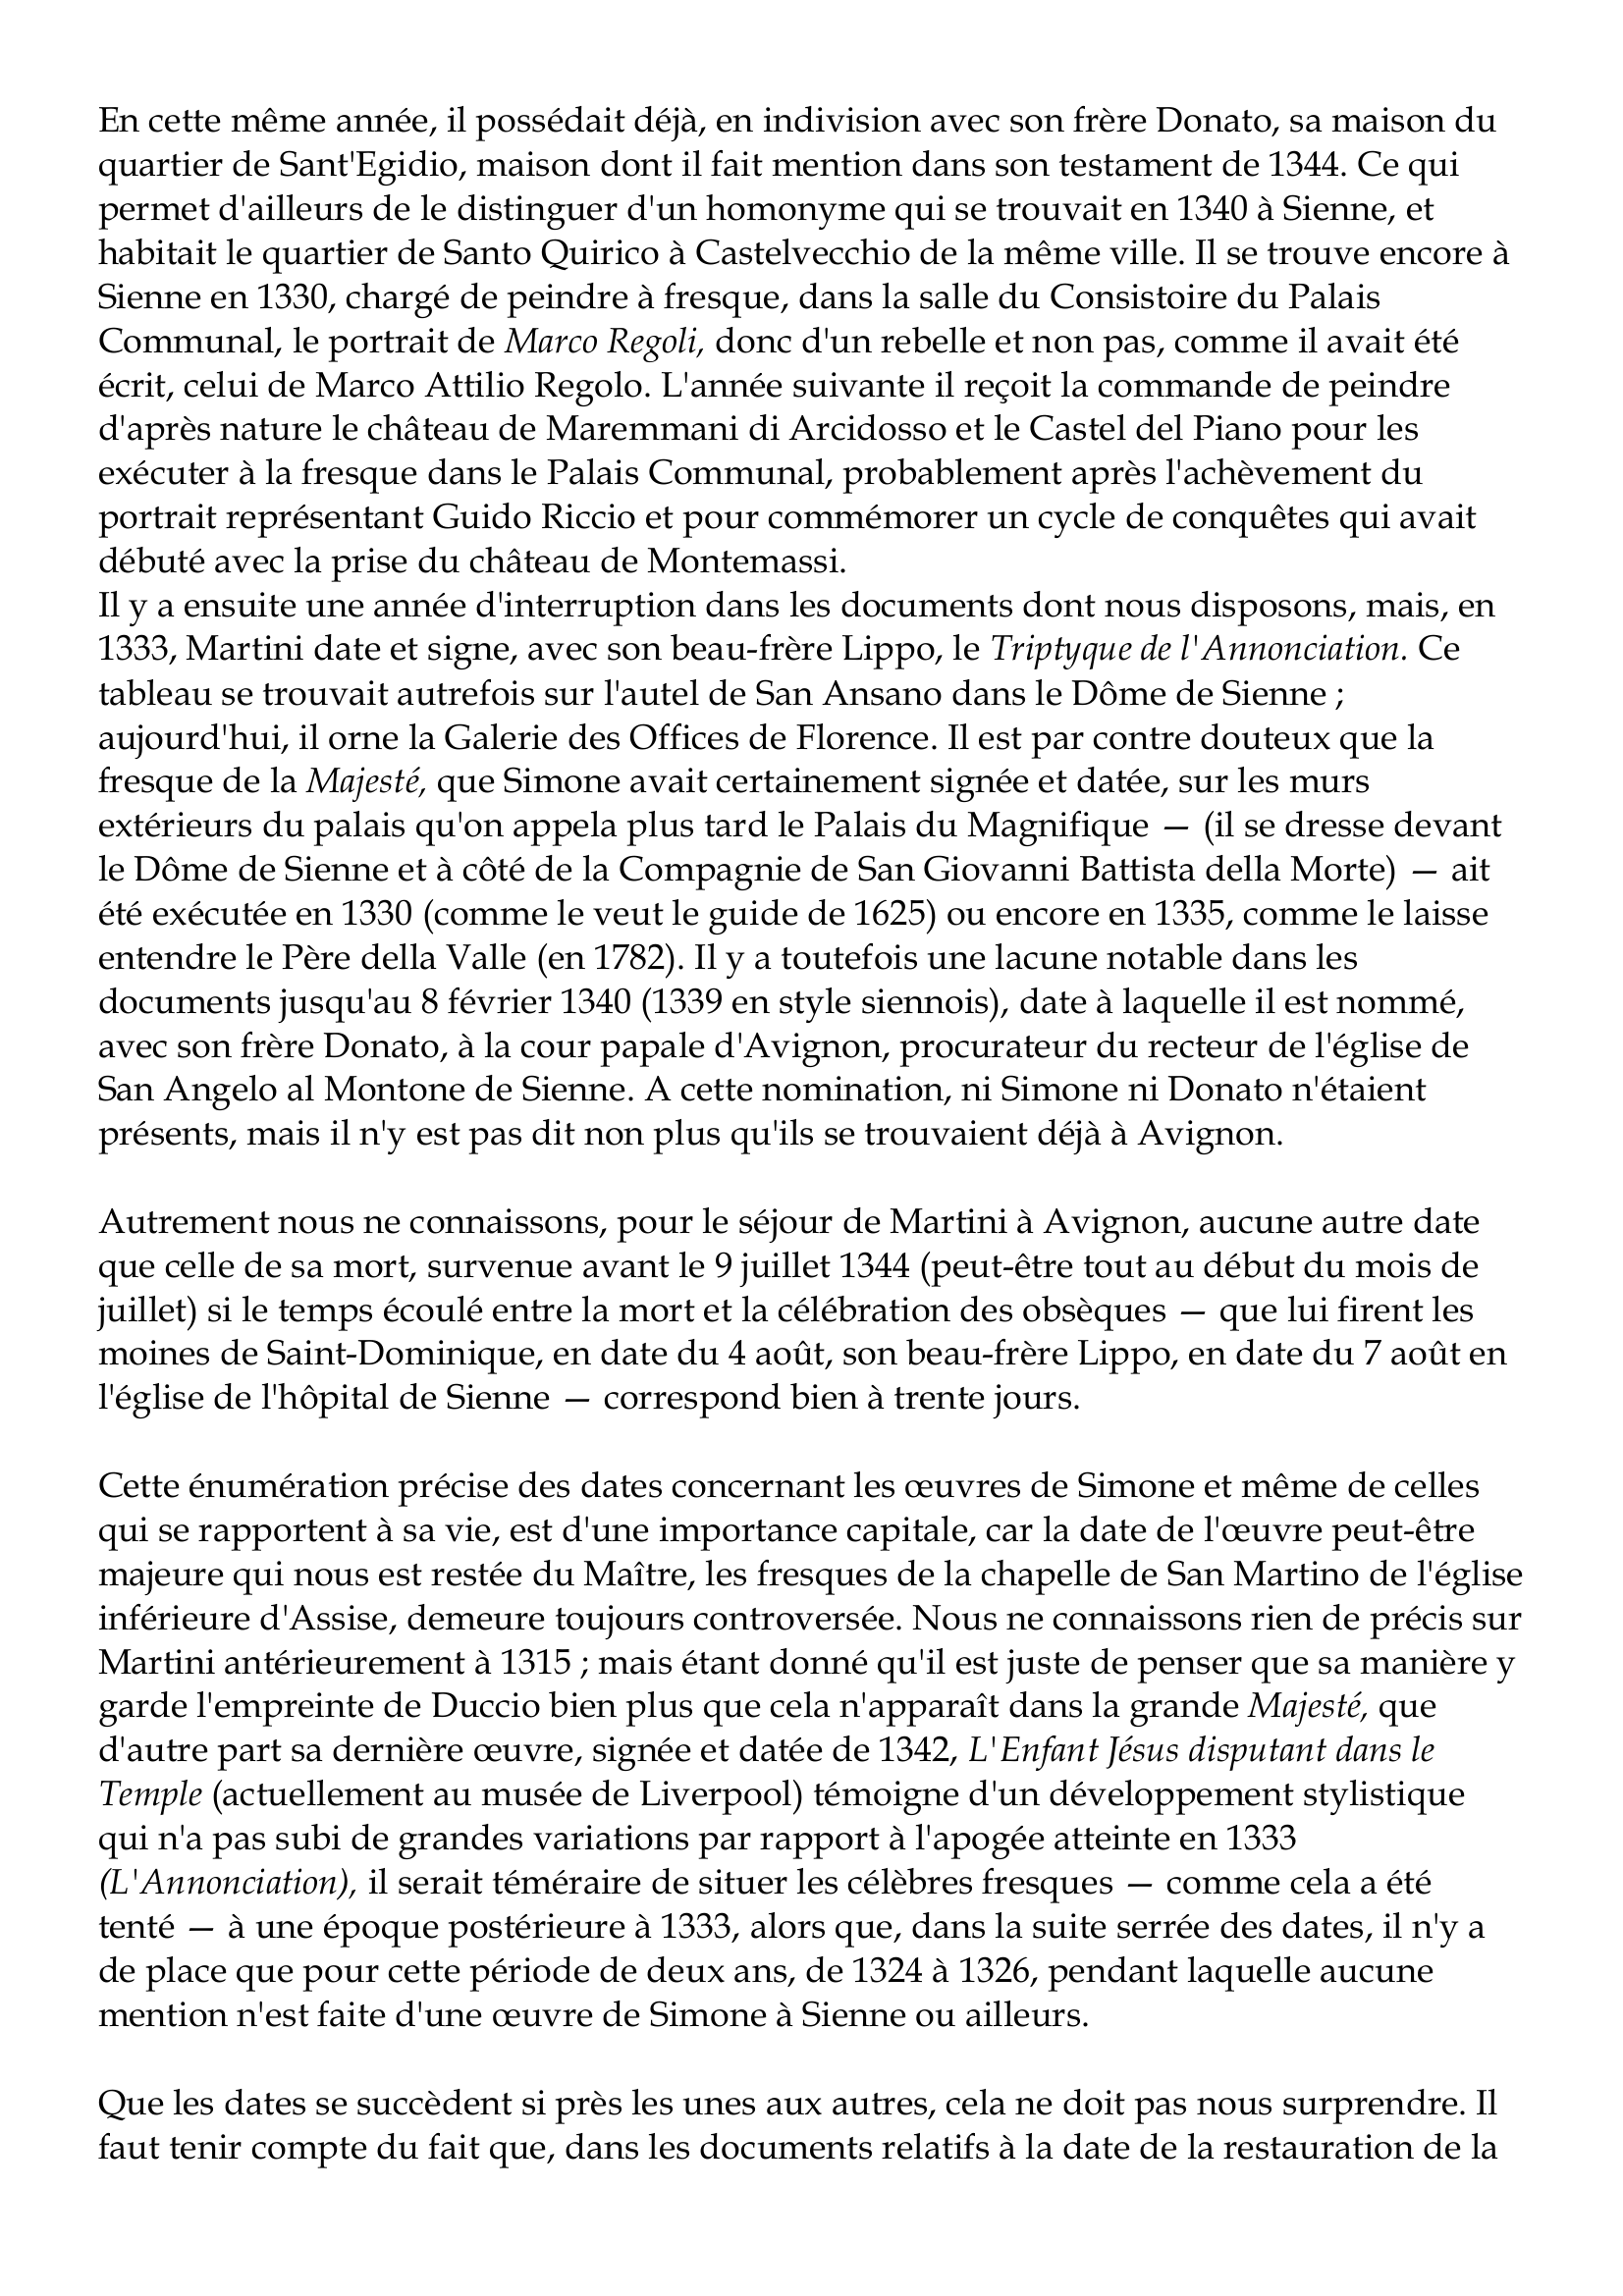 Prévisualisation du document Simone Martini
vers 1282-1344
Simone Martini, ou plus exactement di Martino, naquit